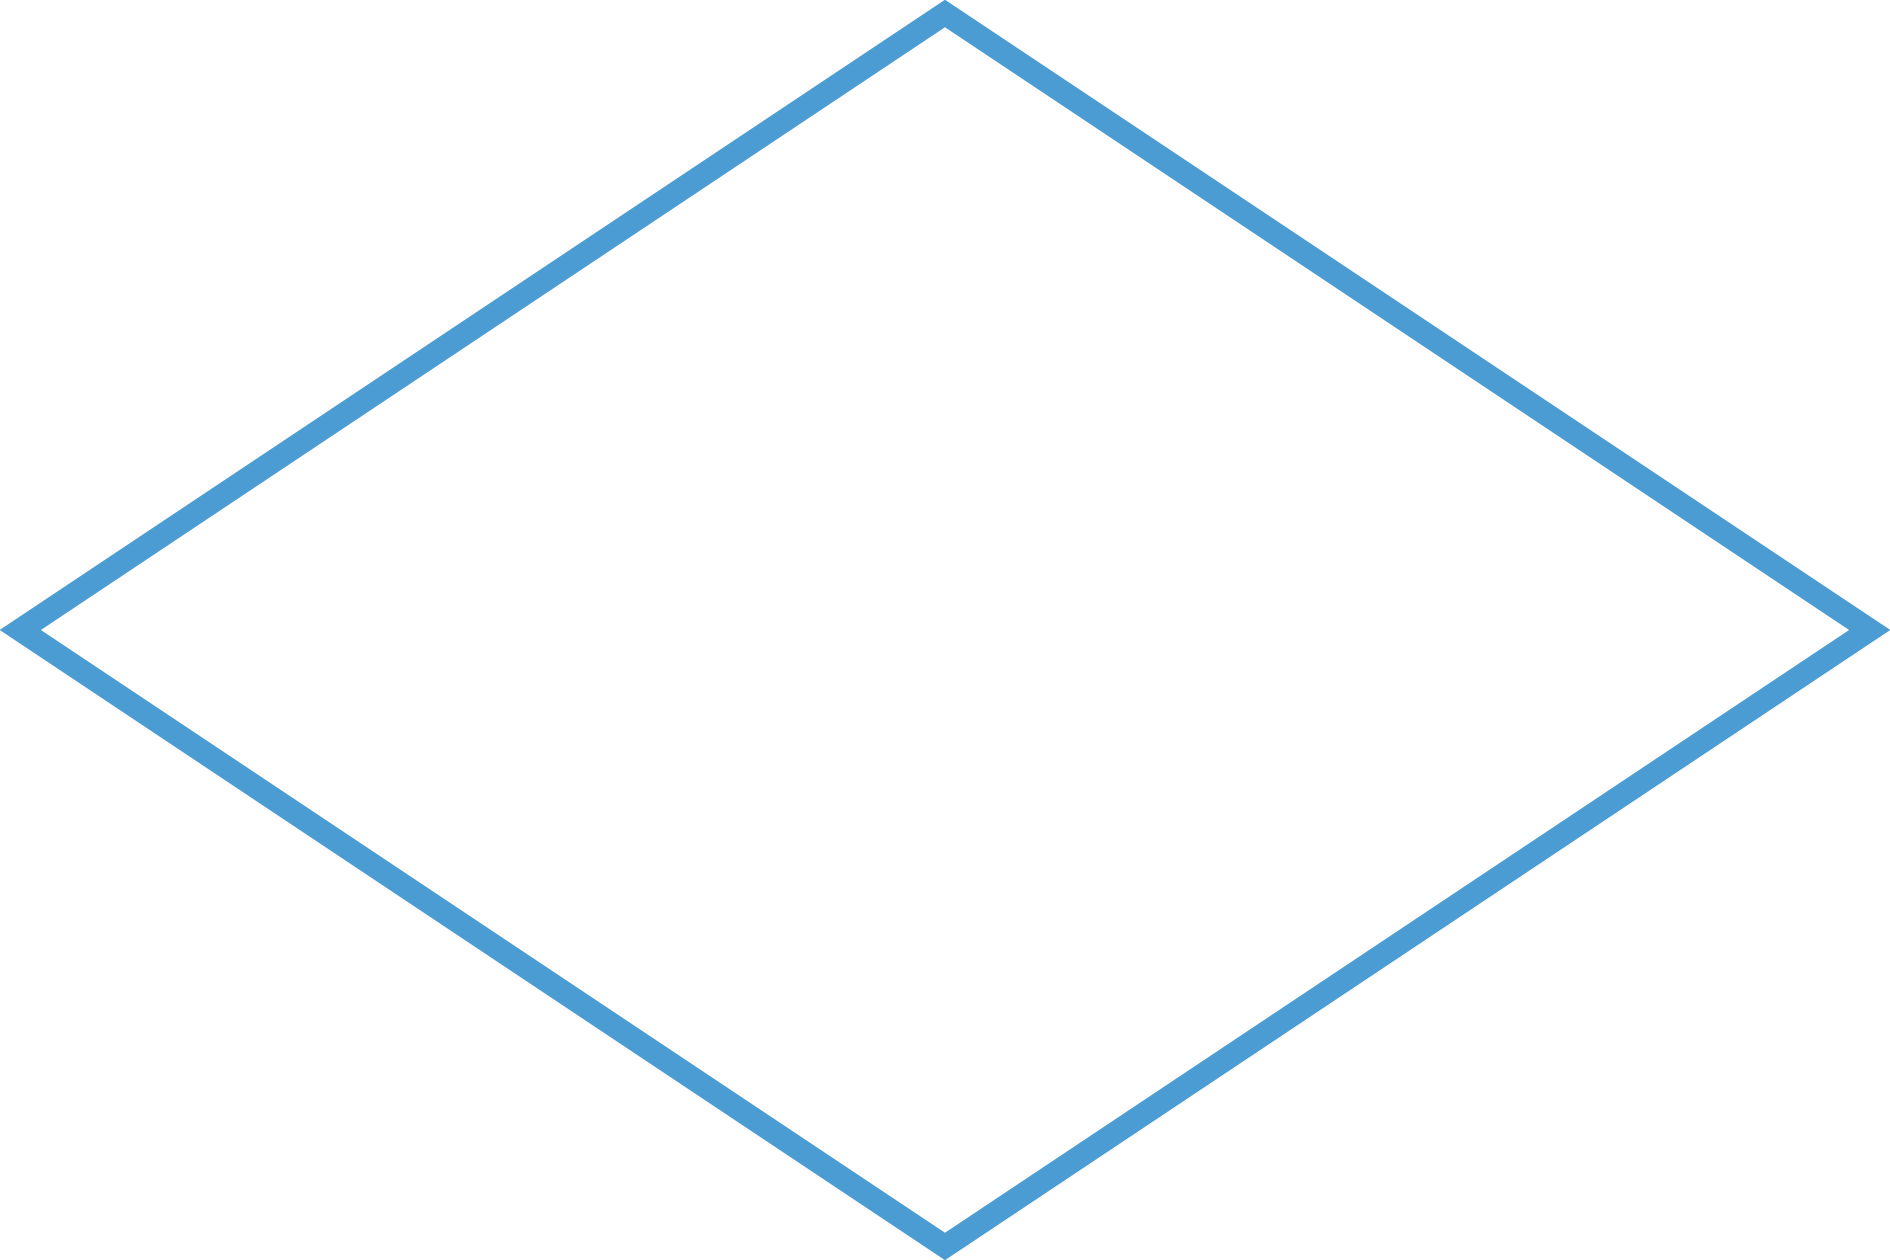 Diamond shape in white with Carolina Blue outline.